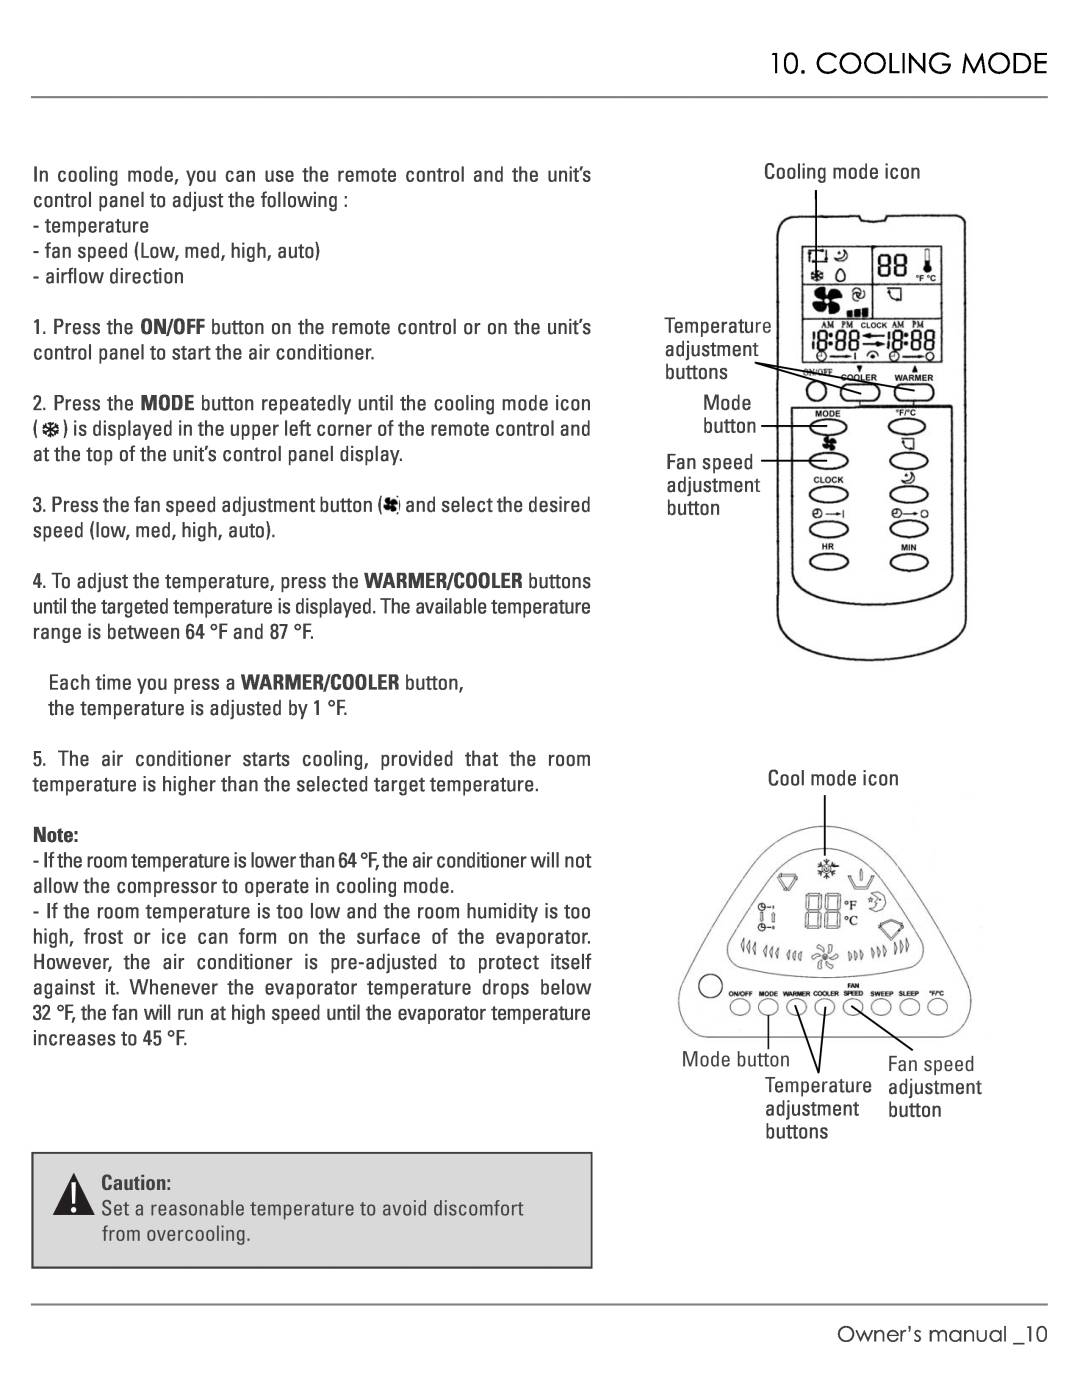 Williams M00045-V01 manual Cooling Mode 